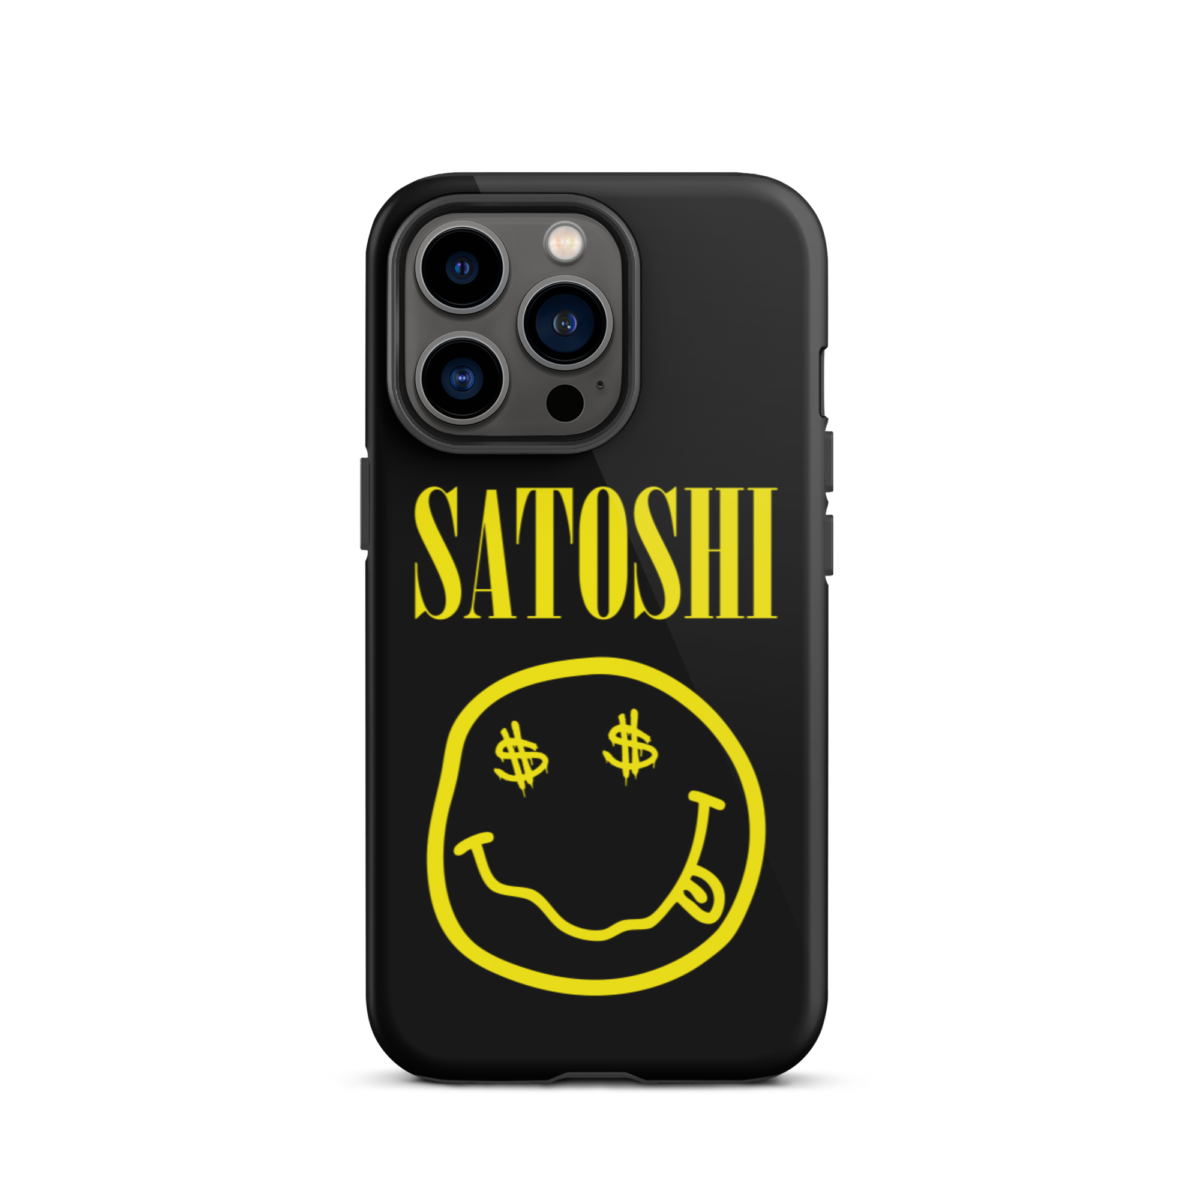 tough iphone case glossy iphone 13 pro front 6397c1799eb50 - Satoshi YLW Tough iPhone Case